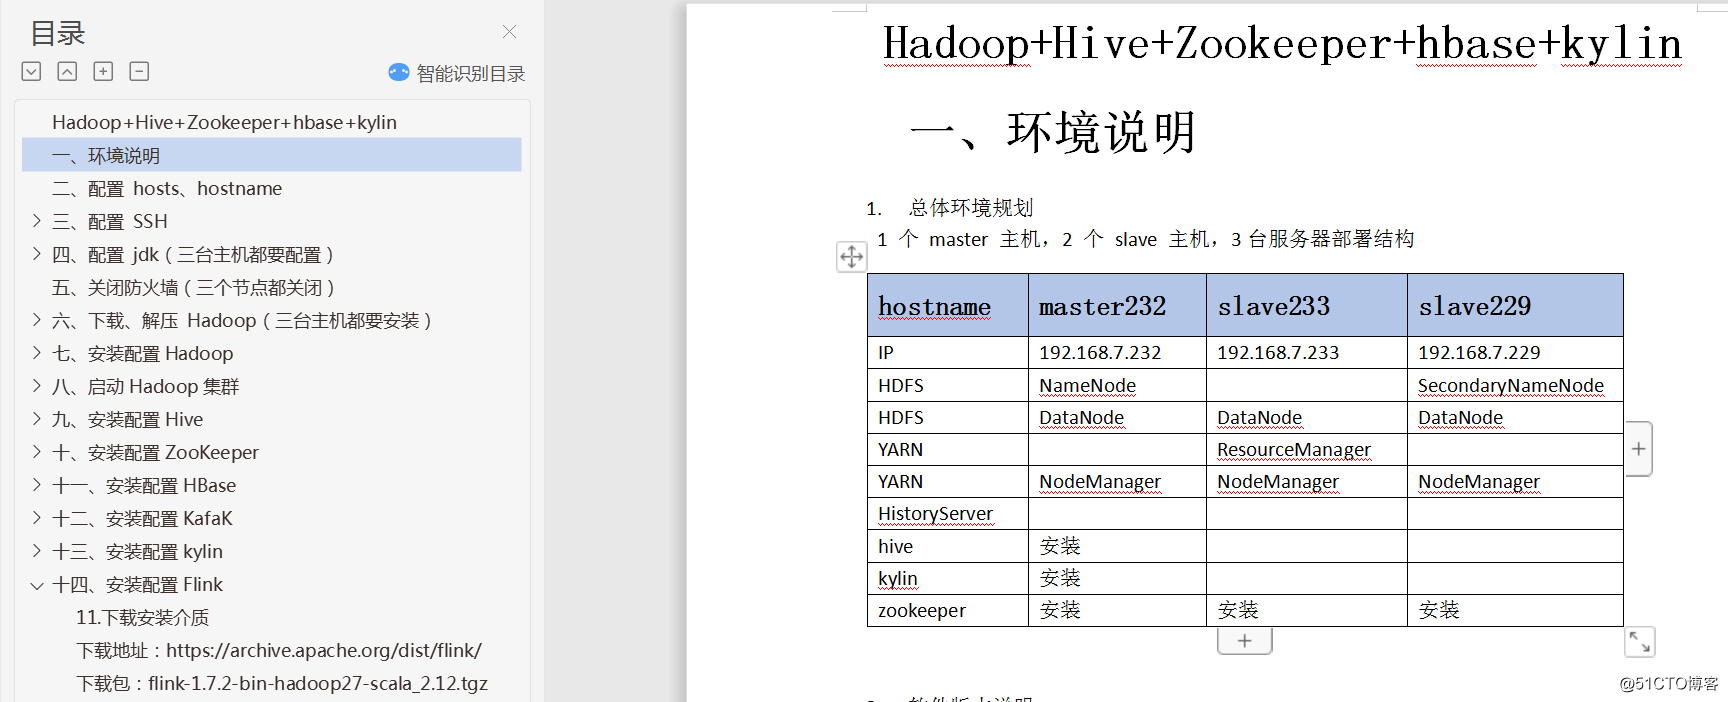 Hadoop+Hive+Zookeeper+hbase+kylin环境搭建说明